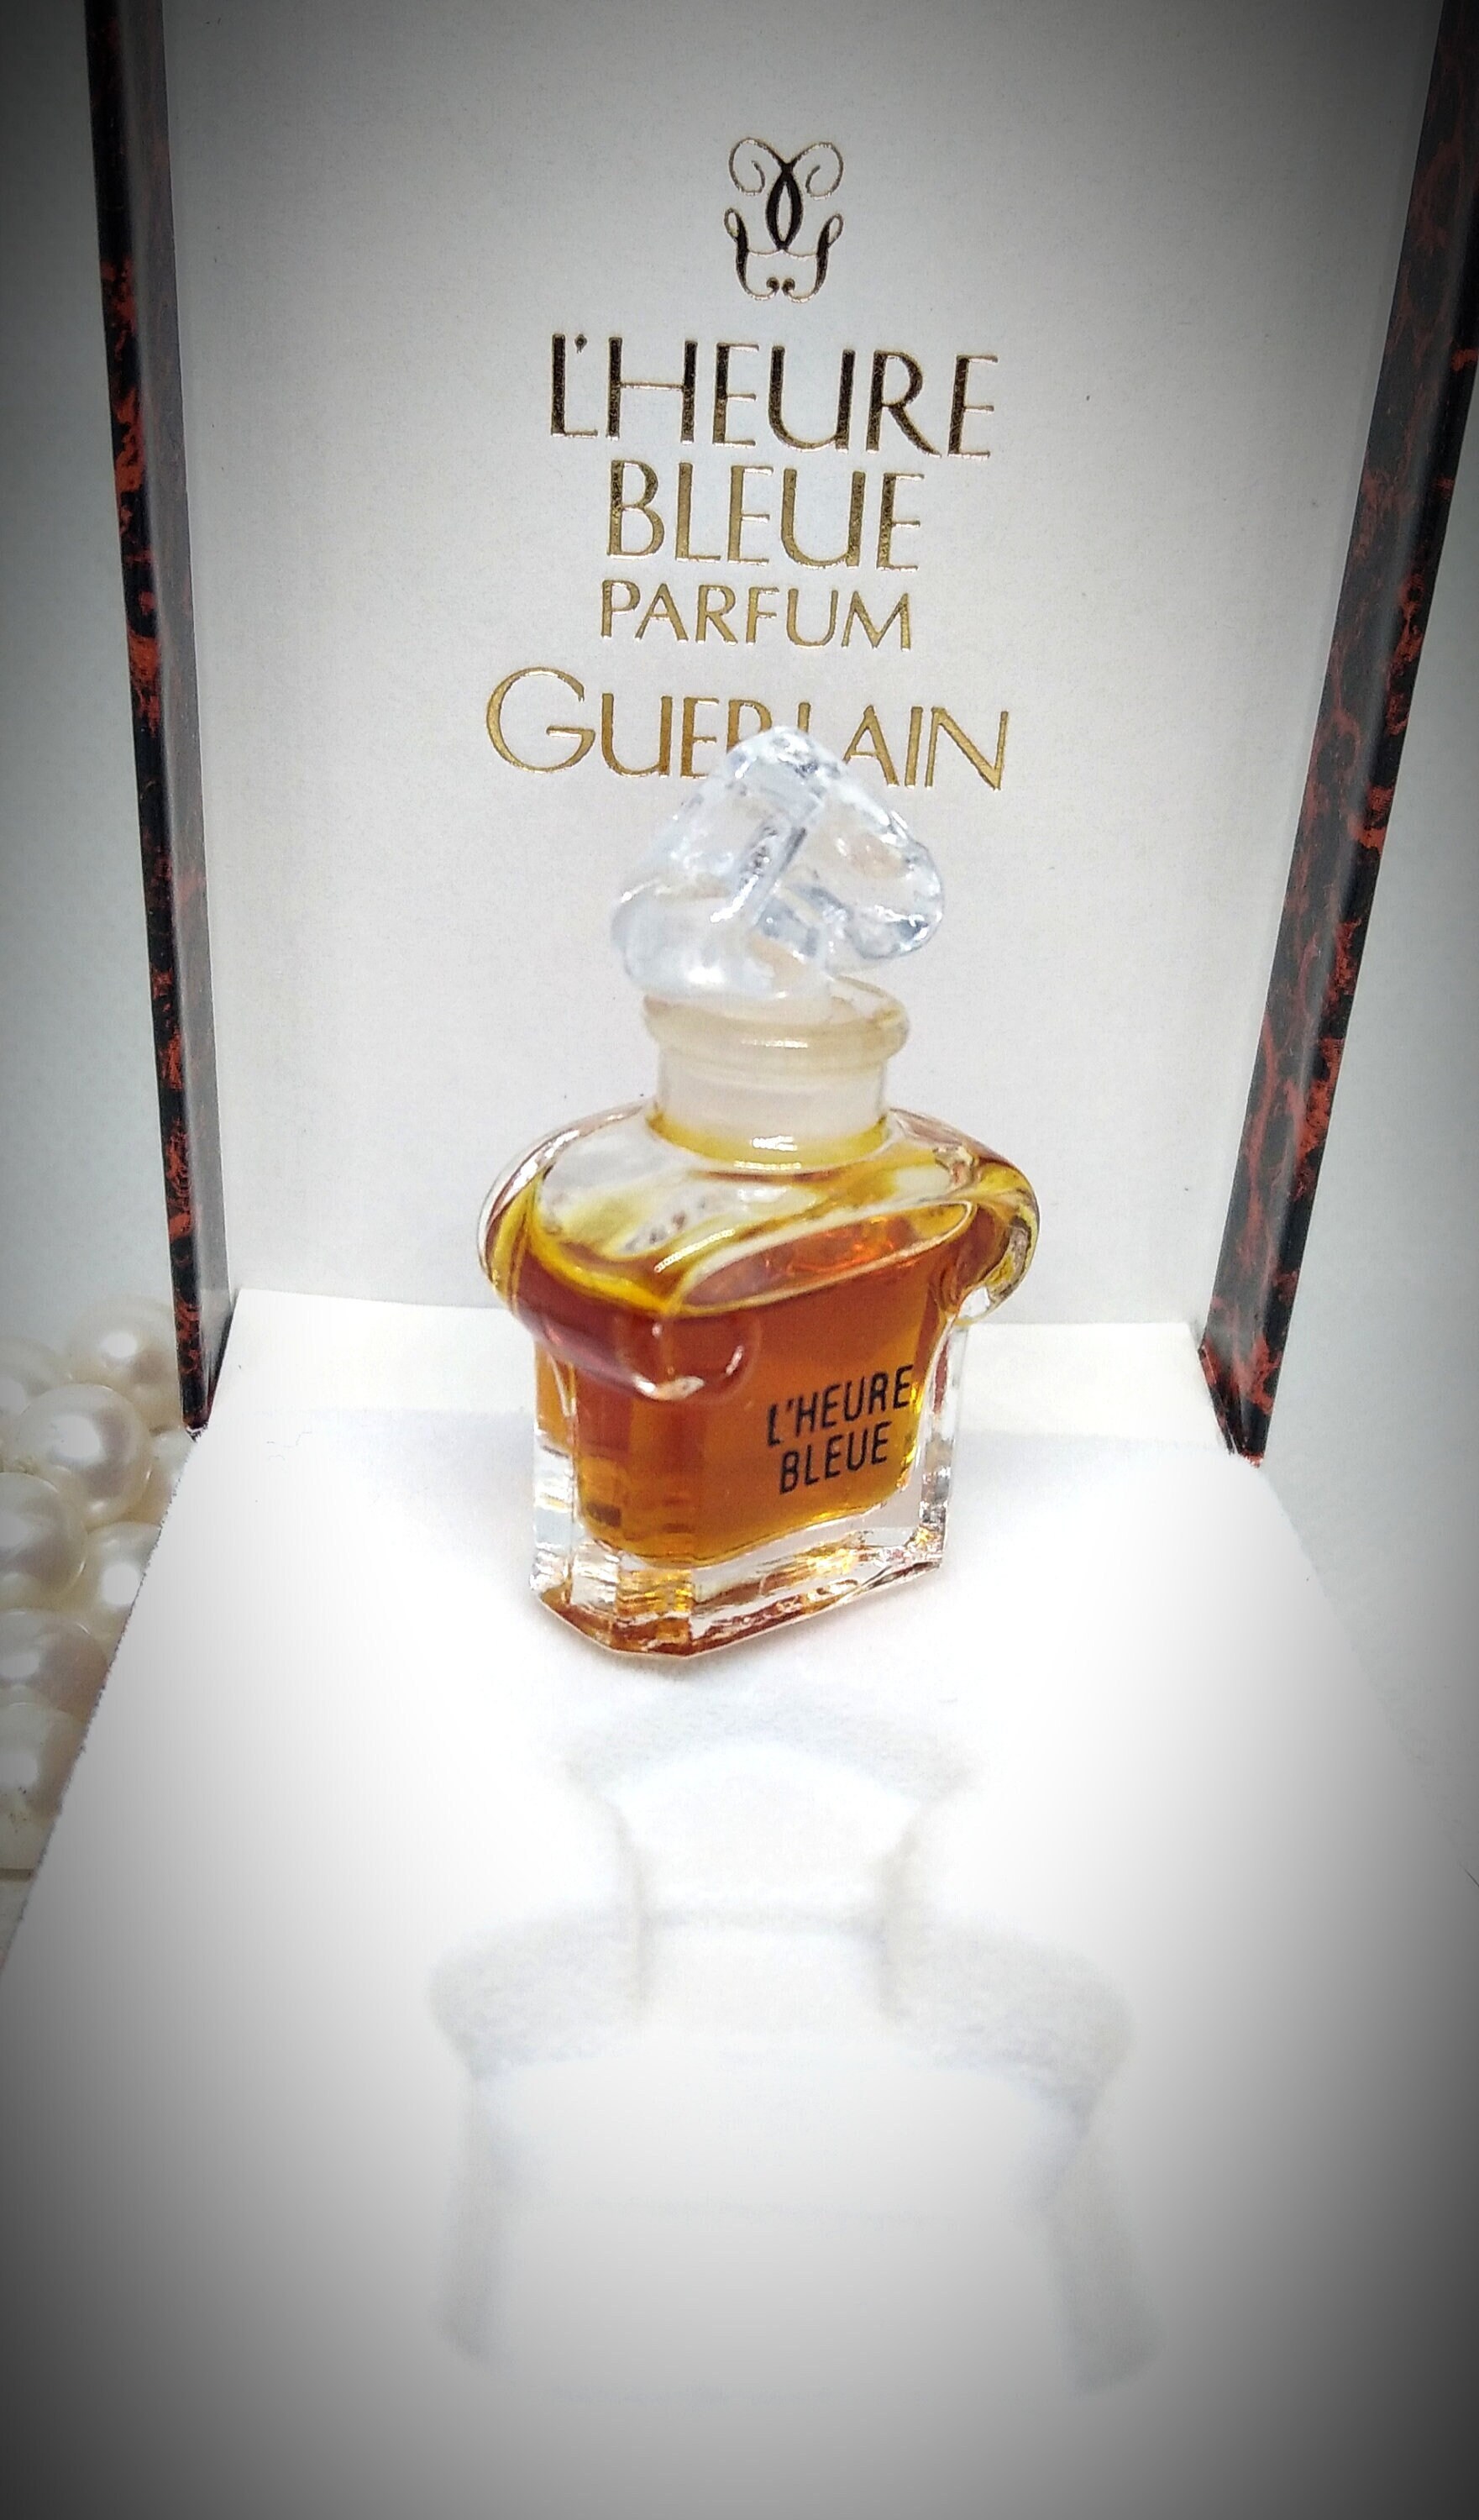 Fol Arôme 2020 by Guerlain » Reviews & Perfume Facts